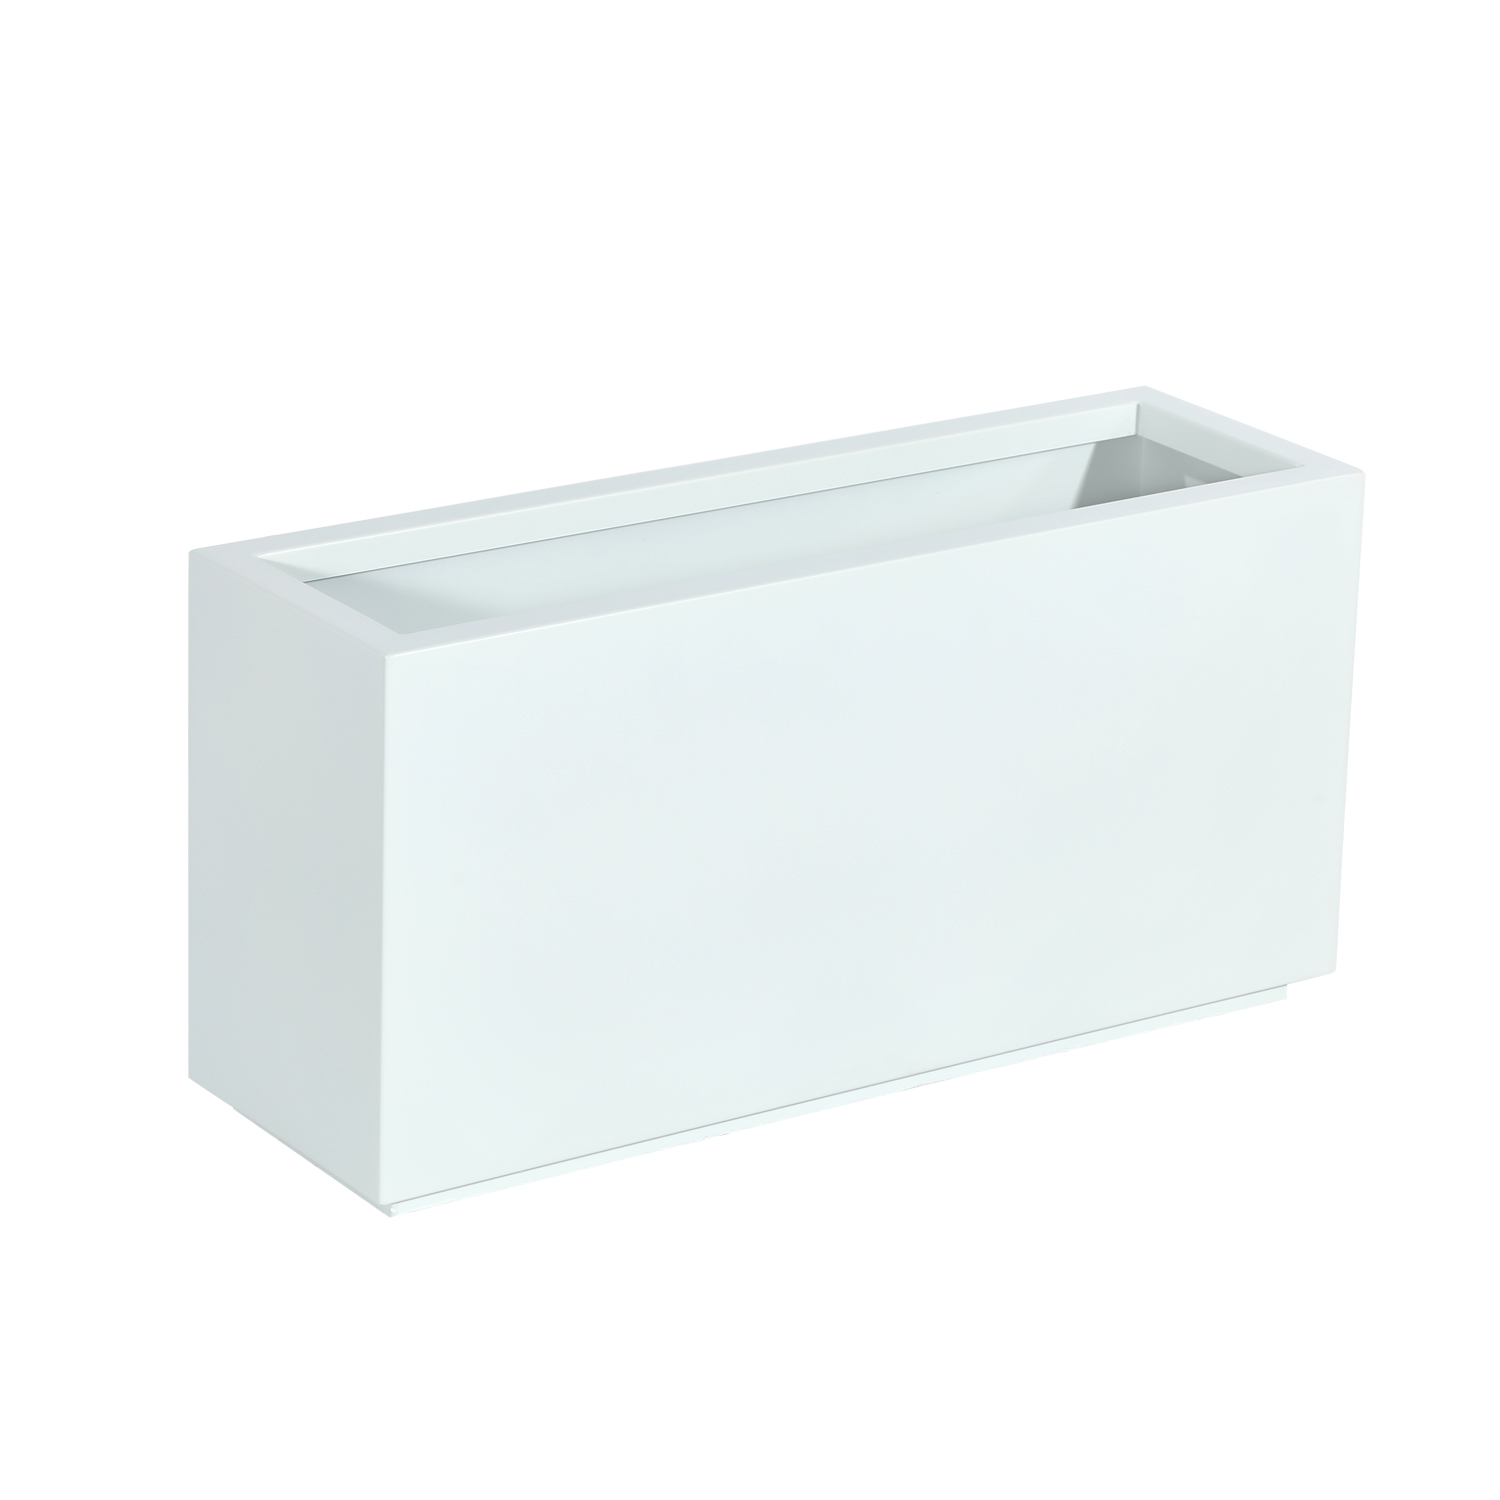 stainless steel rectangular planter box